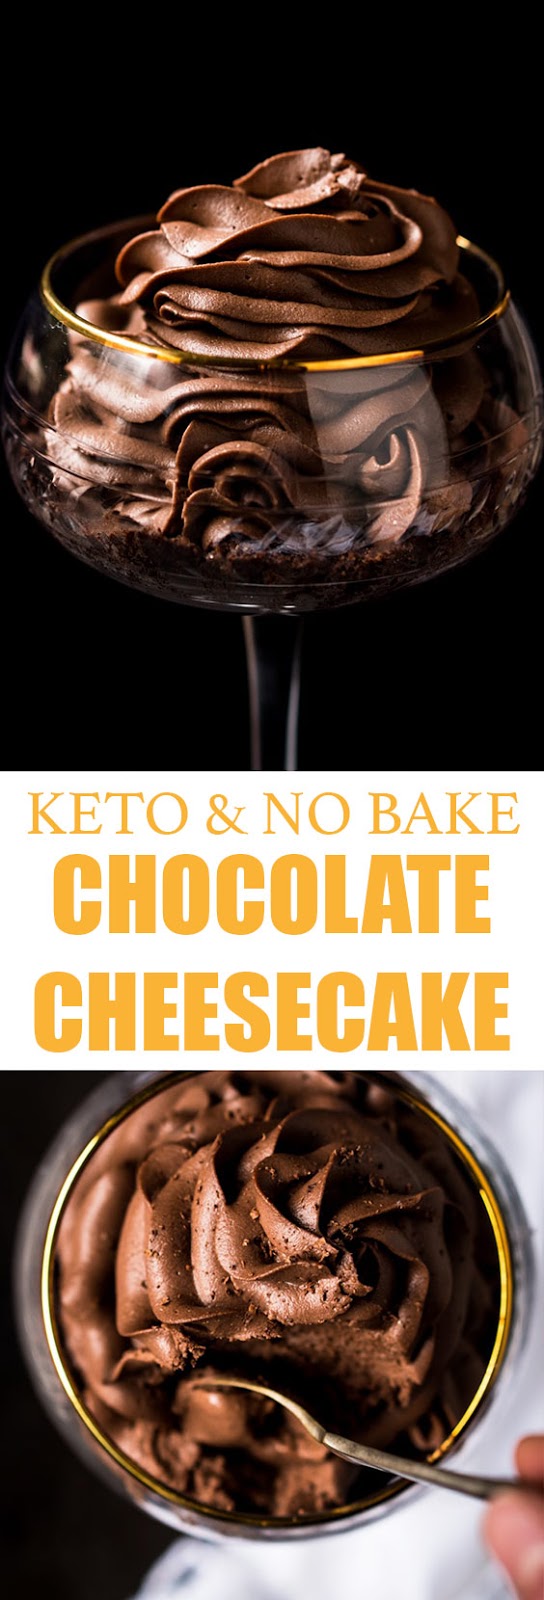 No Bake Chocolate Cheesecake (Gluten Free & Keto)